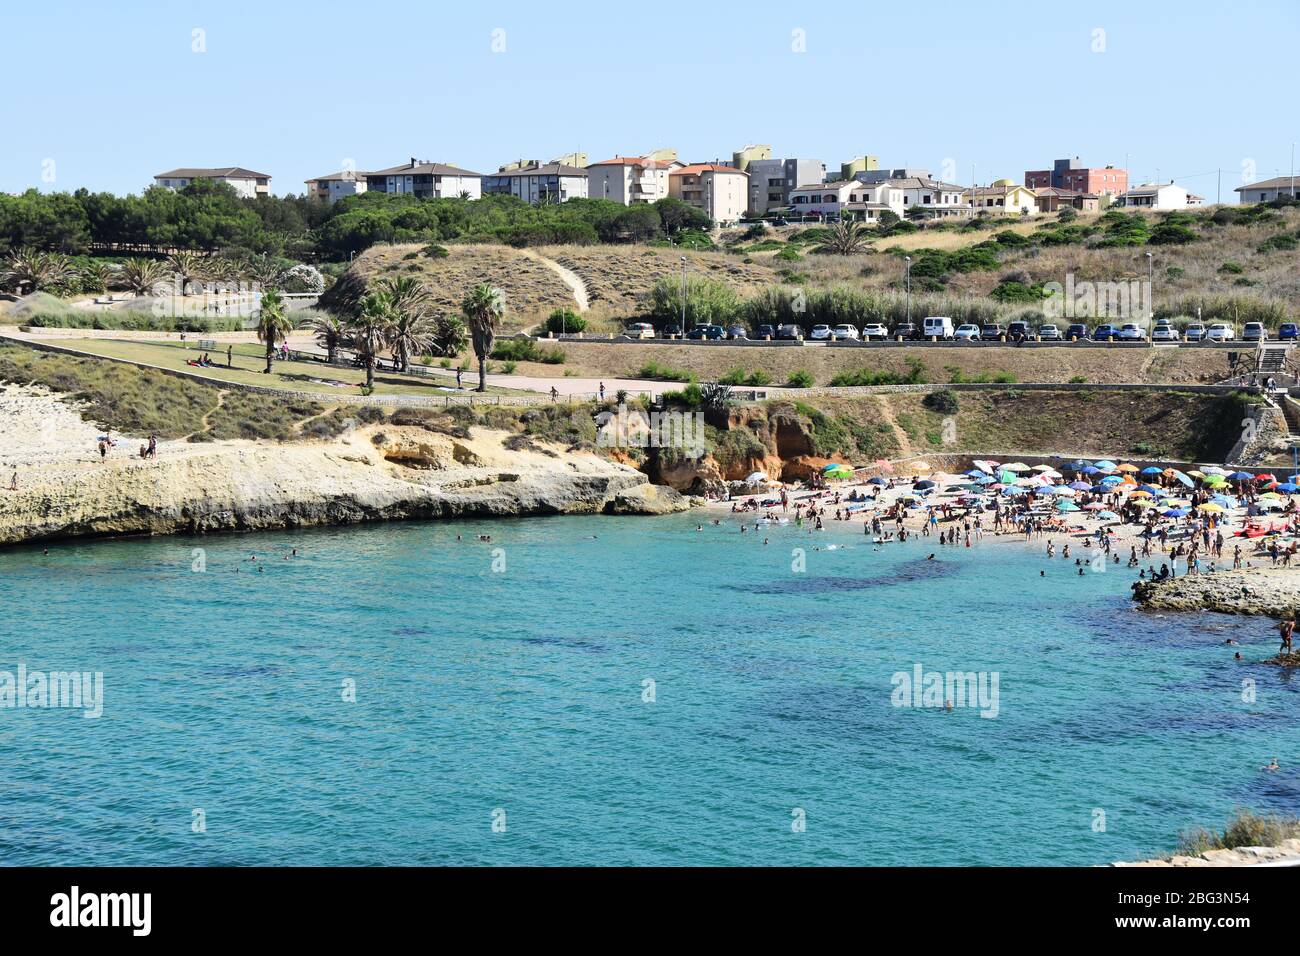 Crowd of people on beach, Porto Torres, Sardinia, Italy Stock Photo - Alamy